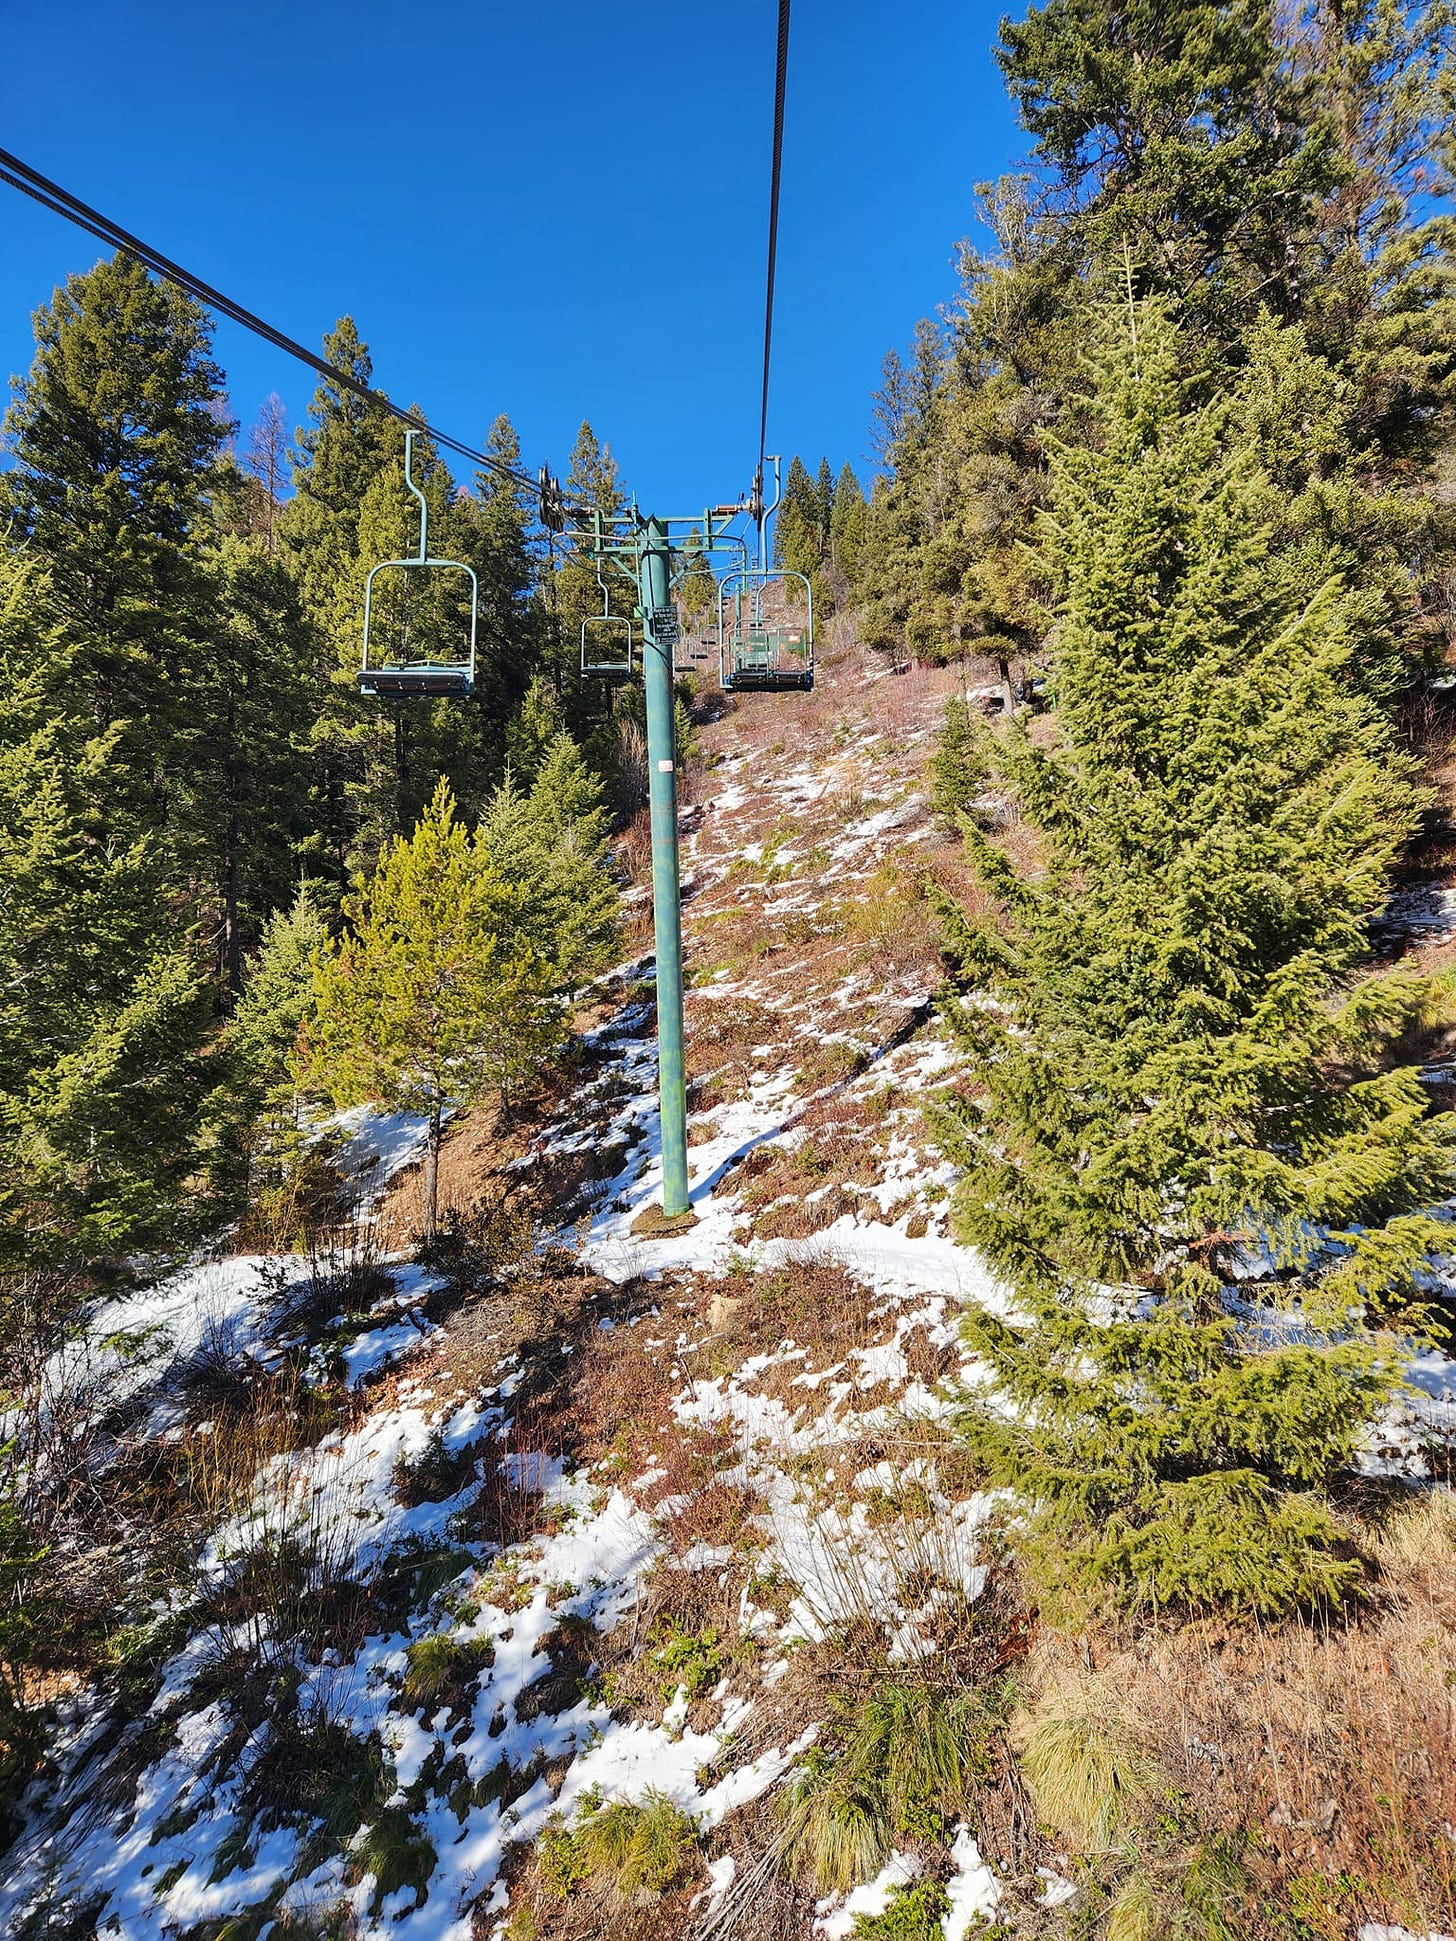 bluebird day on ski lift but no snow just rocks underneath